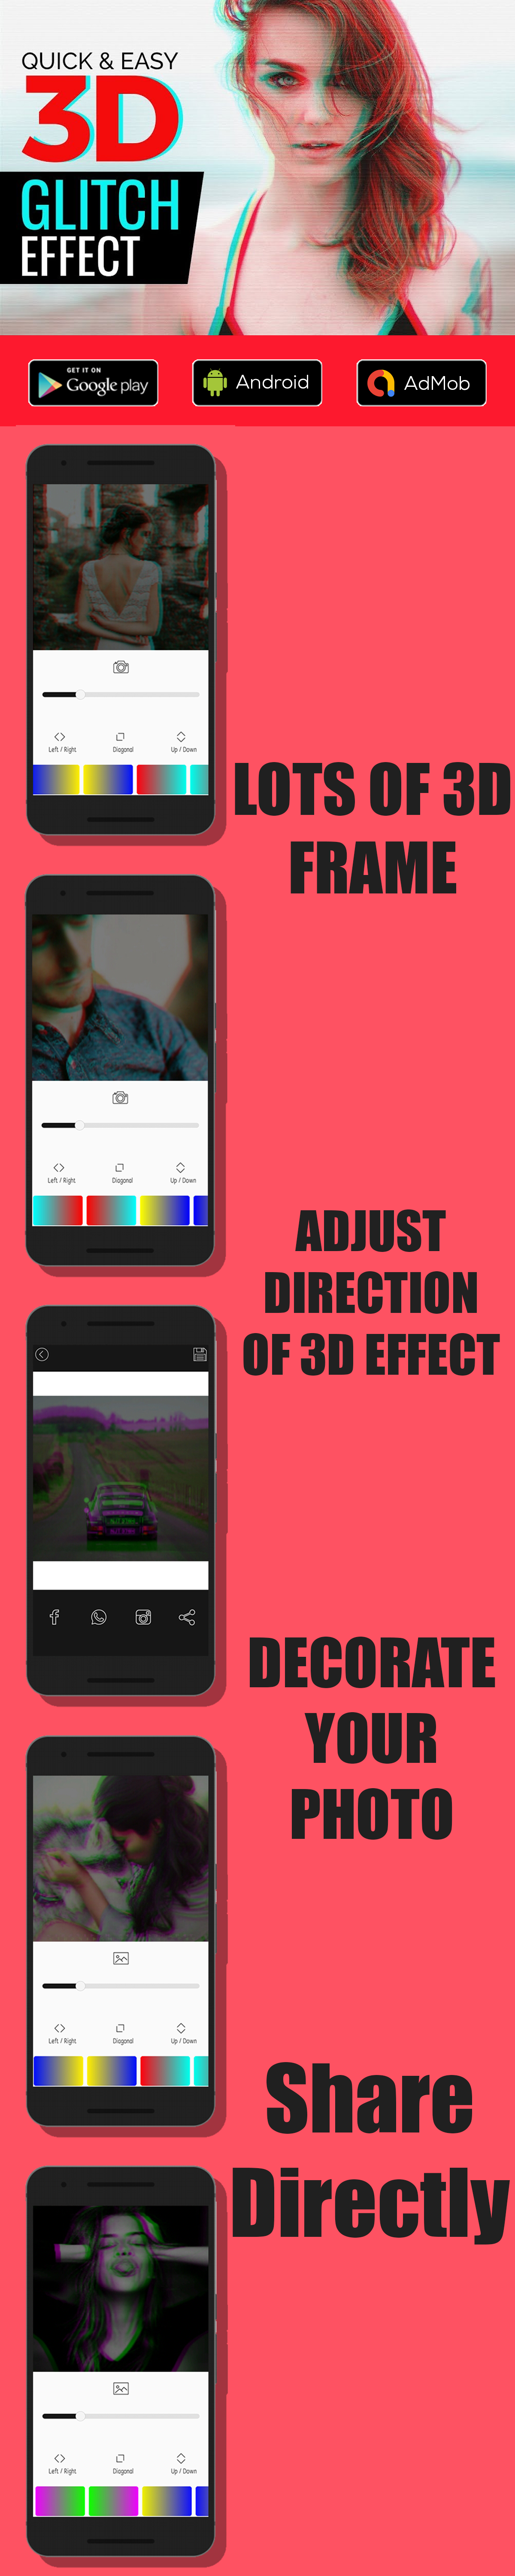 3D Glitch Camera Photo Effect+ Android+ Admob Ads - 1